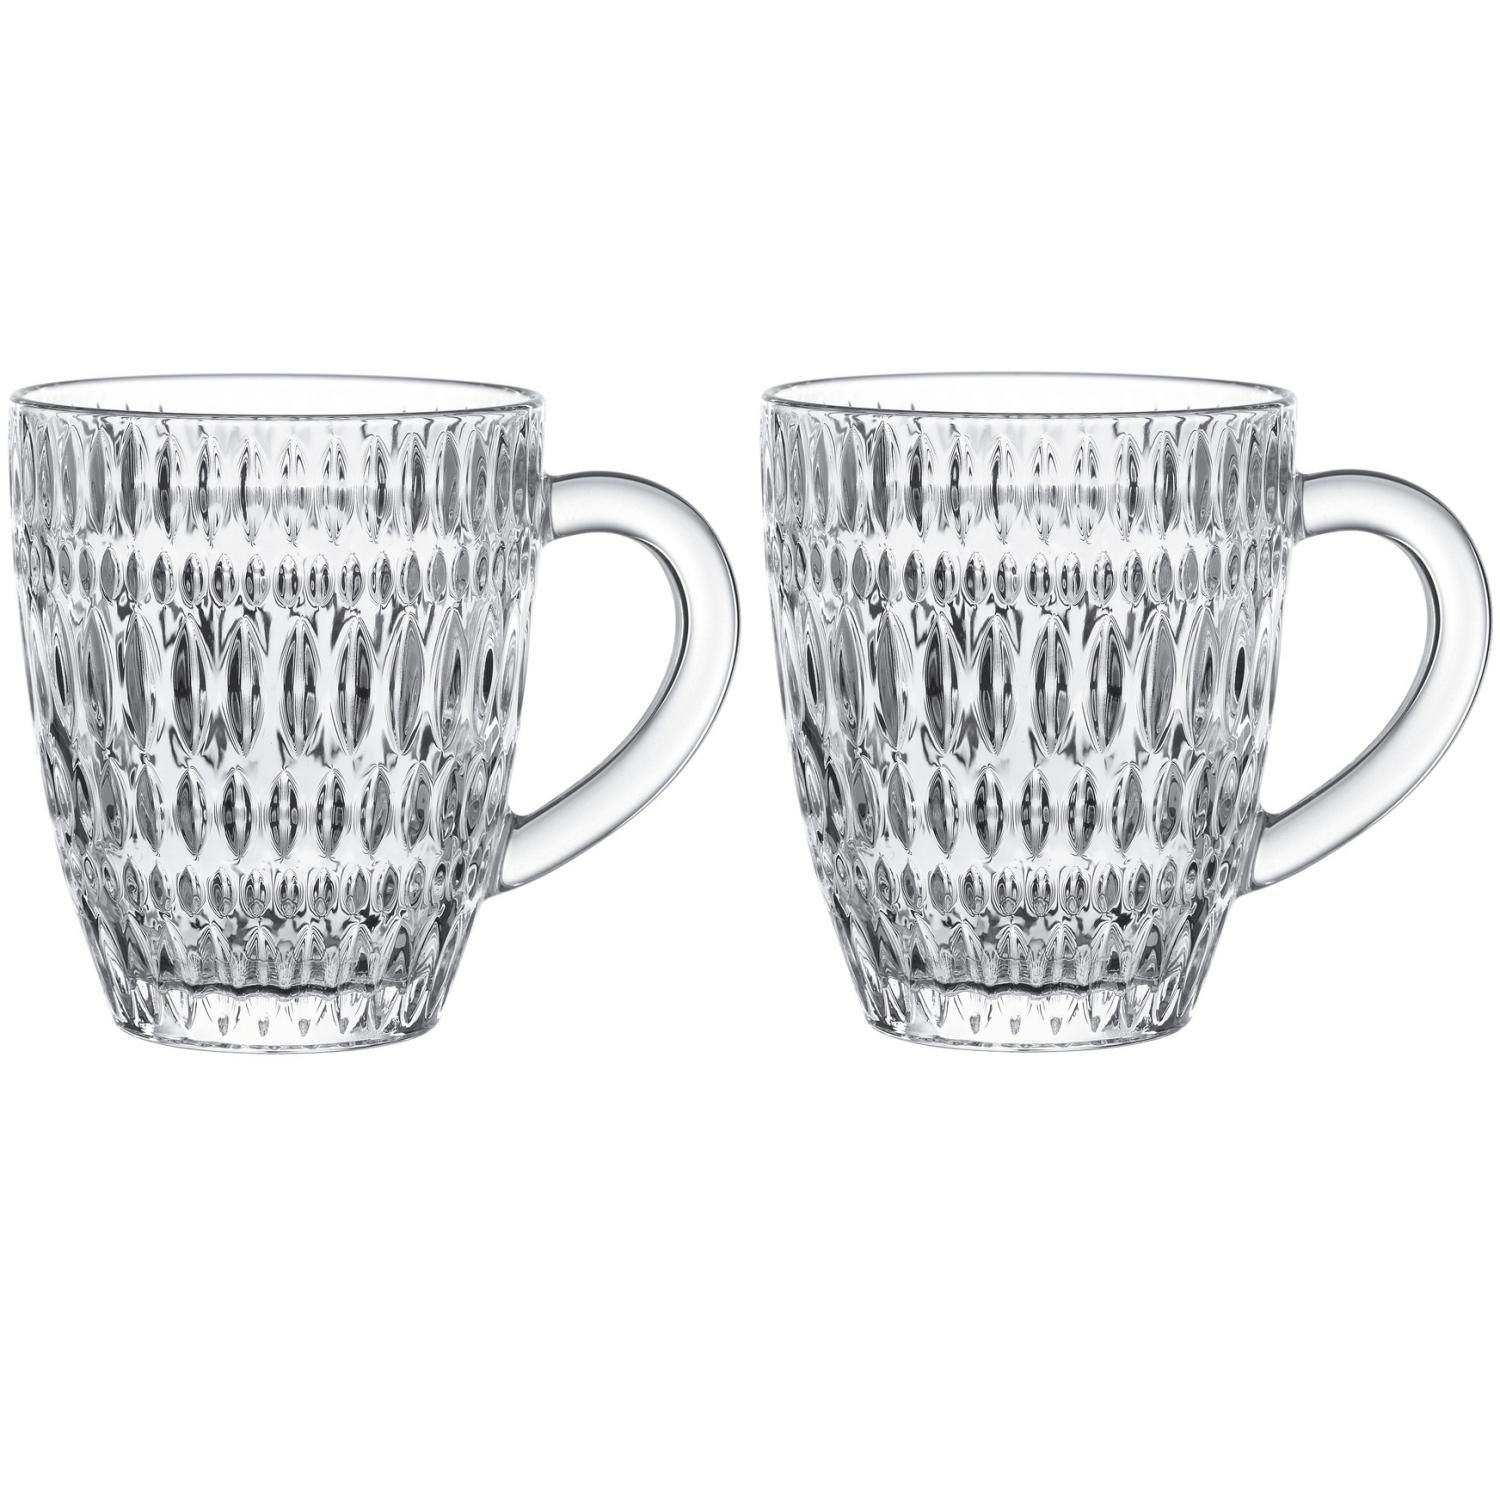 2 кружки для кофе Nachtmann Ethno Hot Beverage Mug 392 мл (арт. 104249)